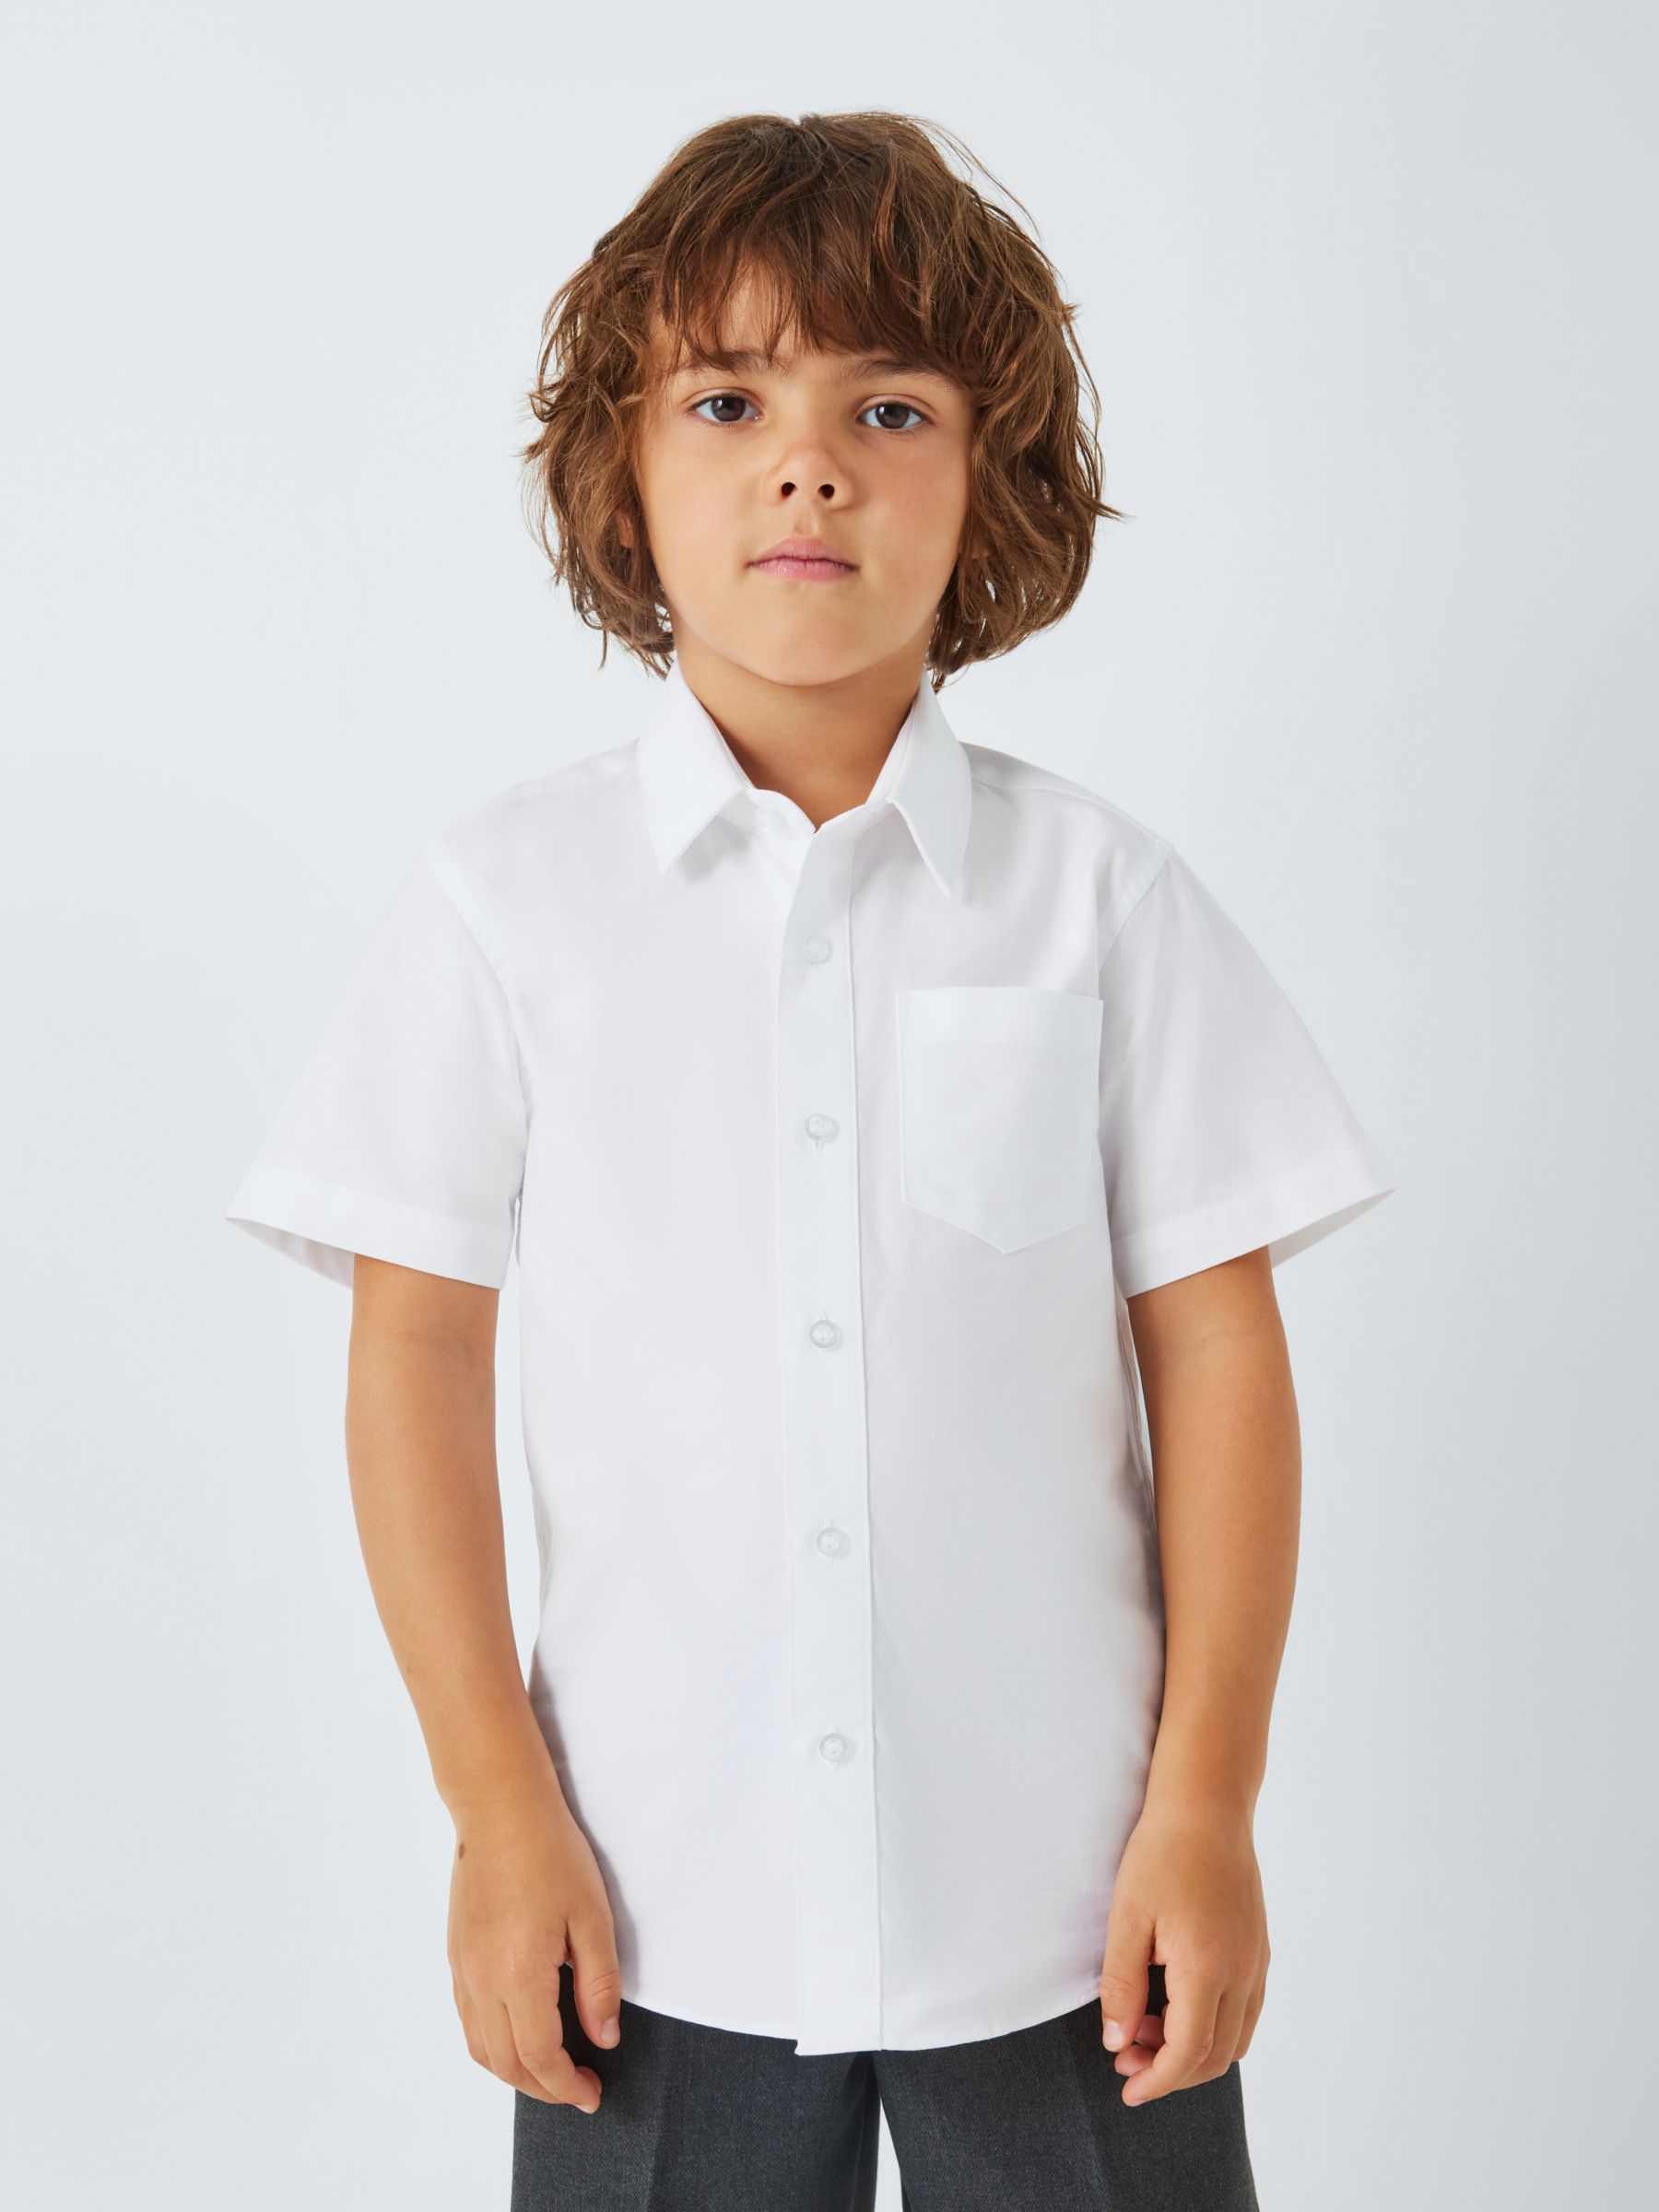 Buy John Lewis GOTS Organic Cotton Short Sleeve School Shirt, Pack of 2 Online at johnlewis.com